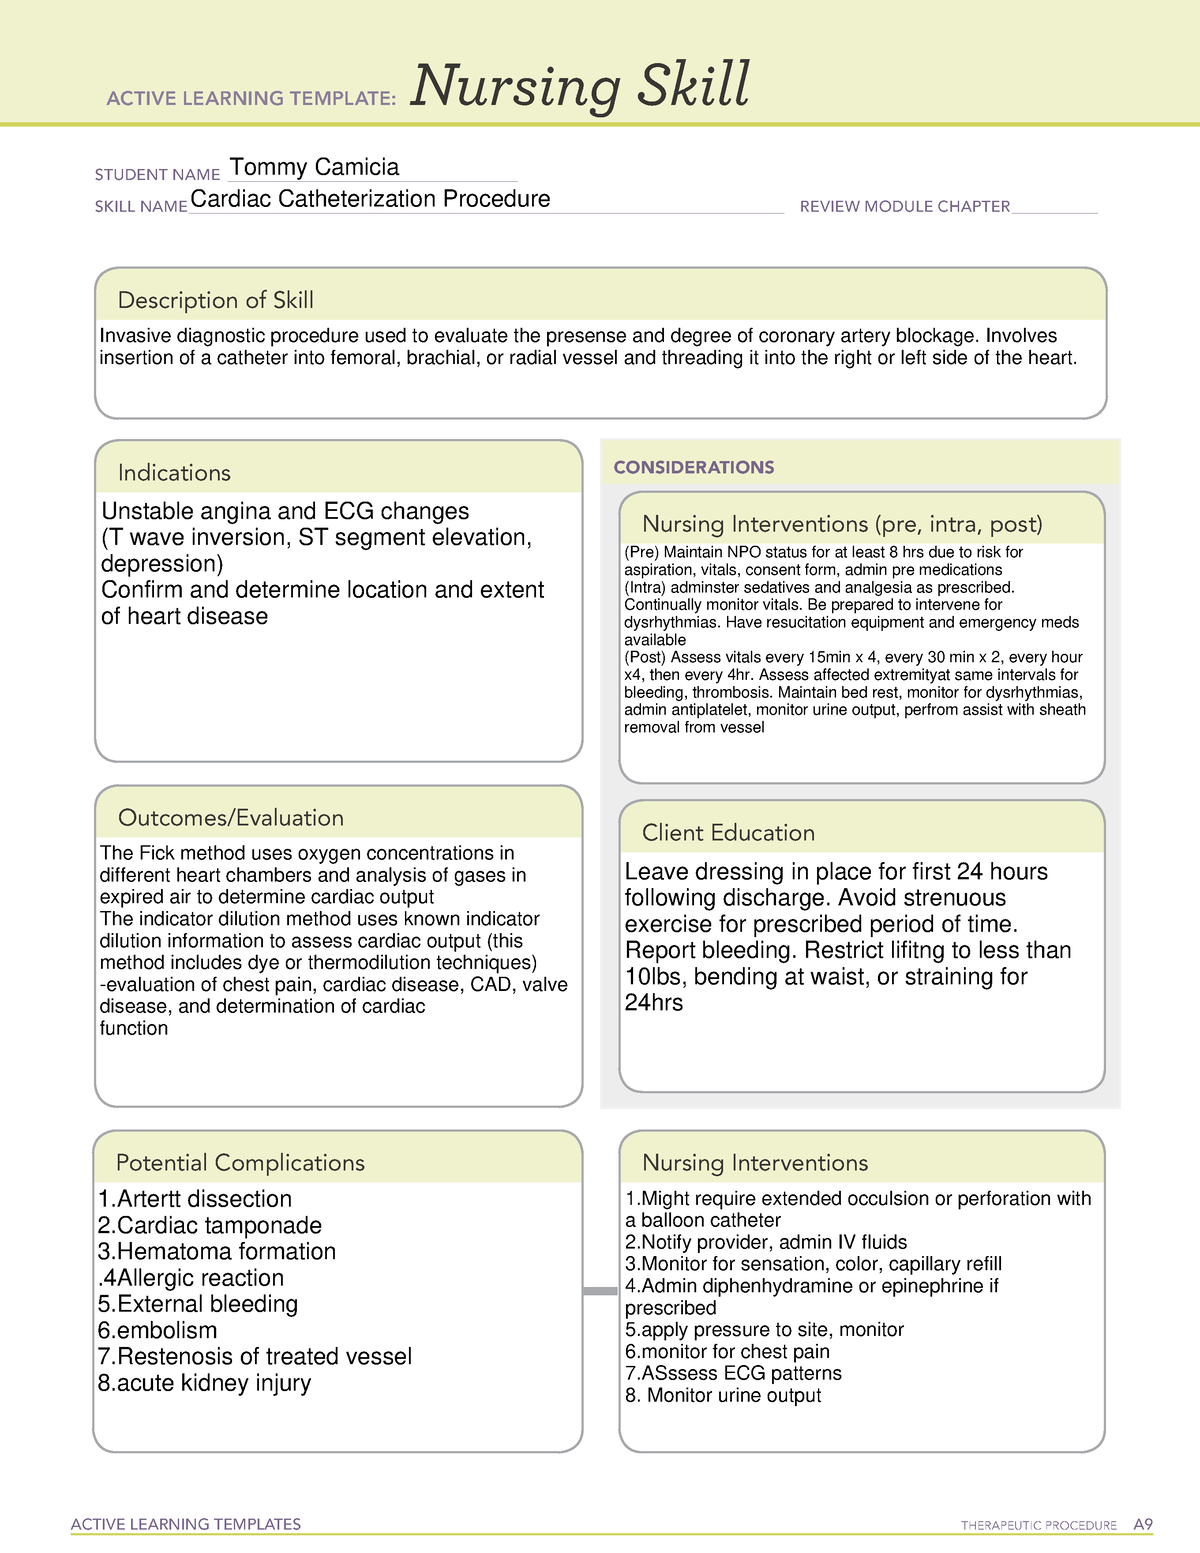 ati-template-nursing-skill-cardiac-catheterization-active-learning-templates-therapeutic